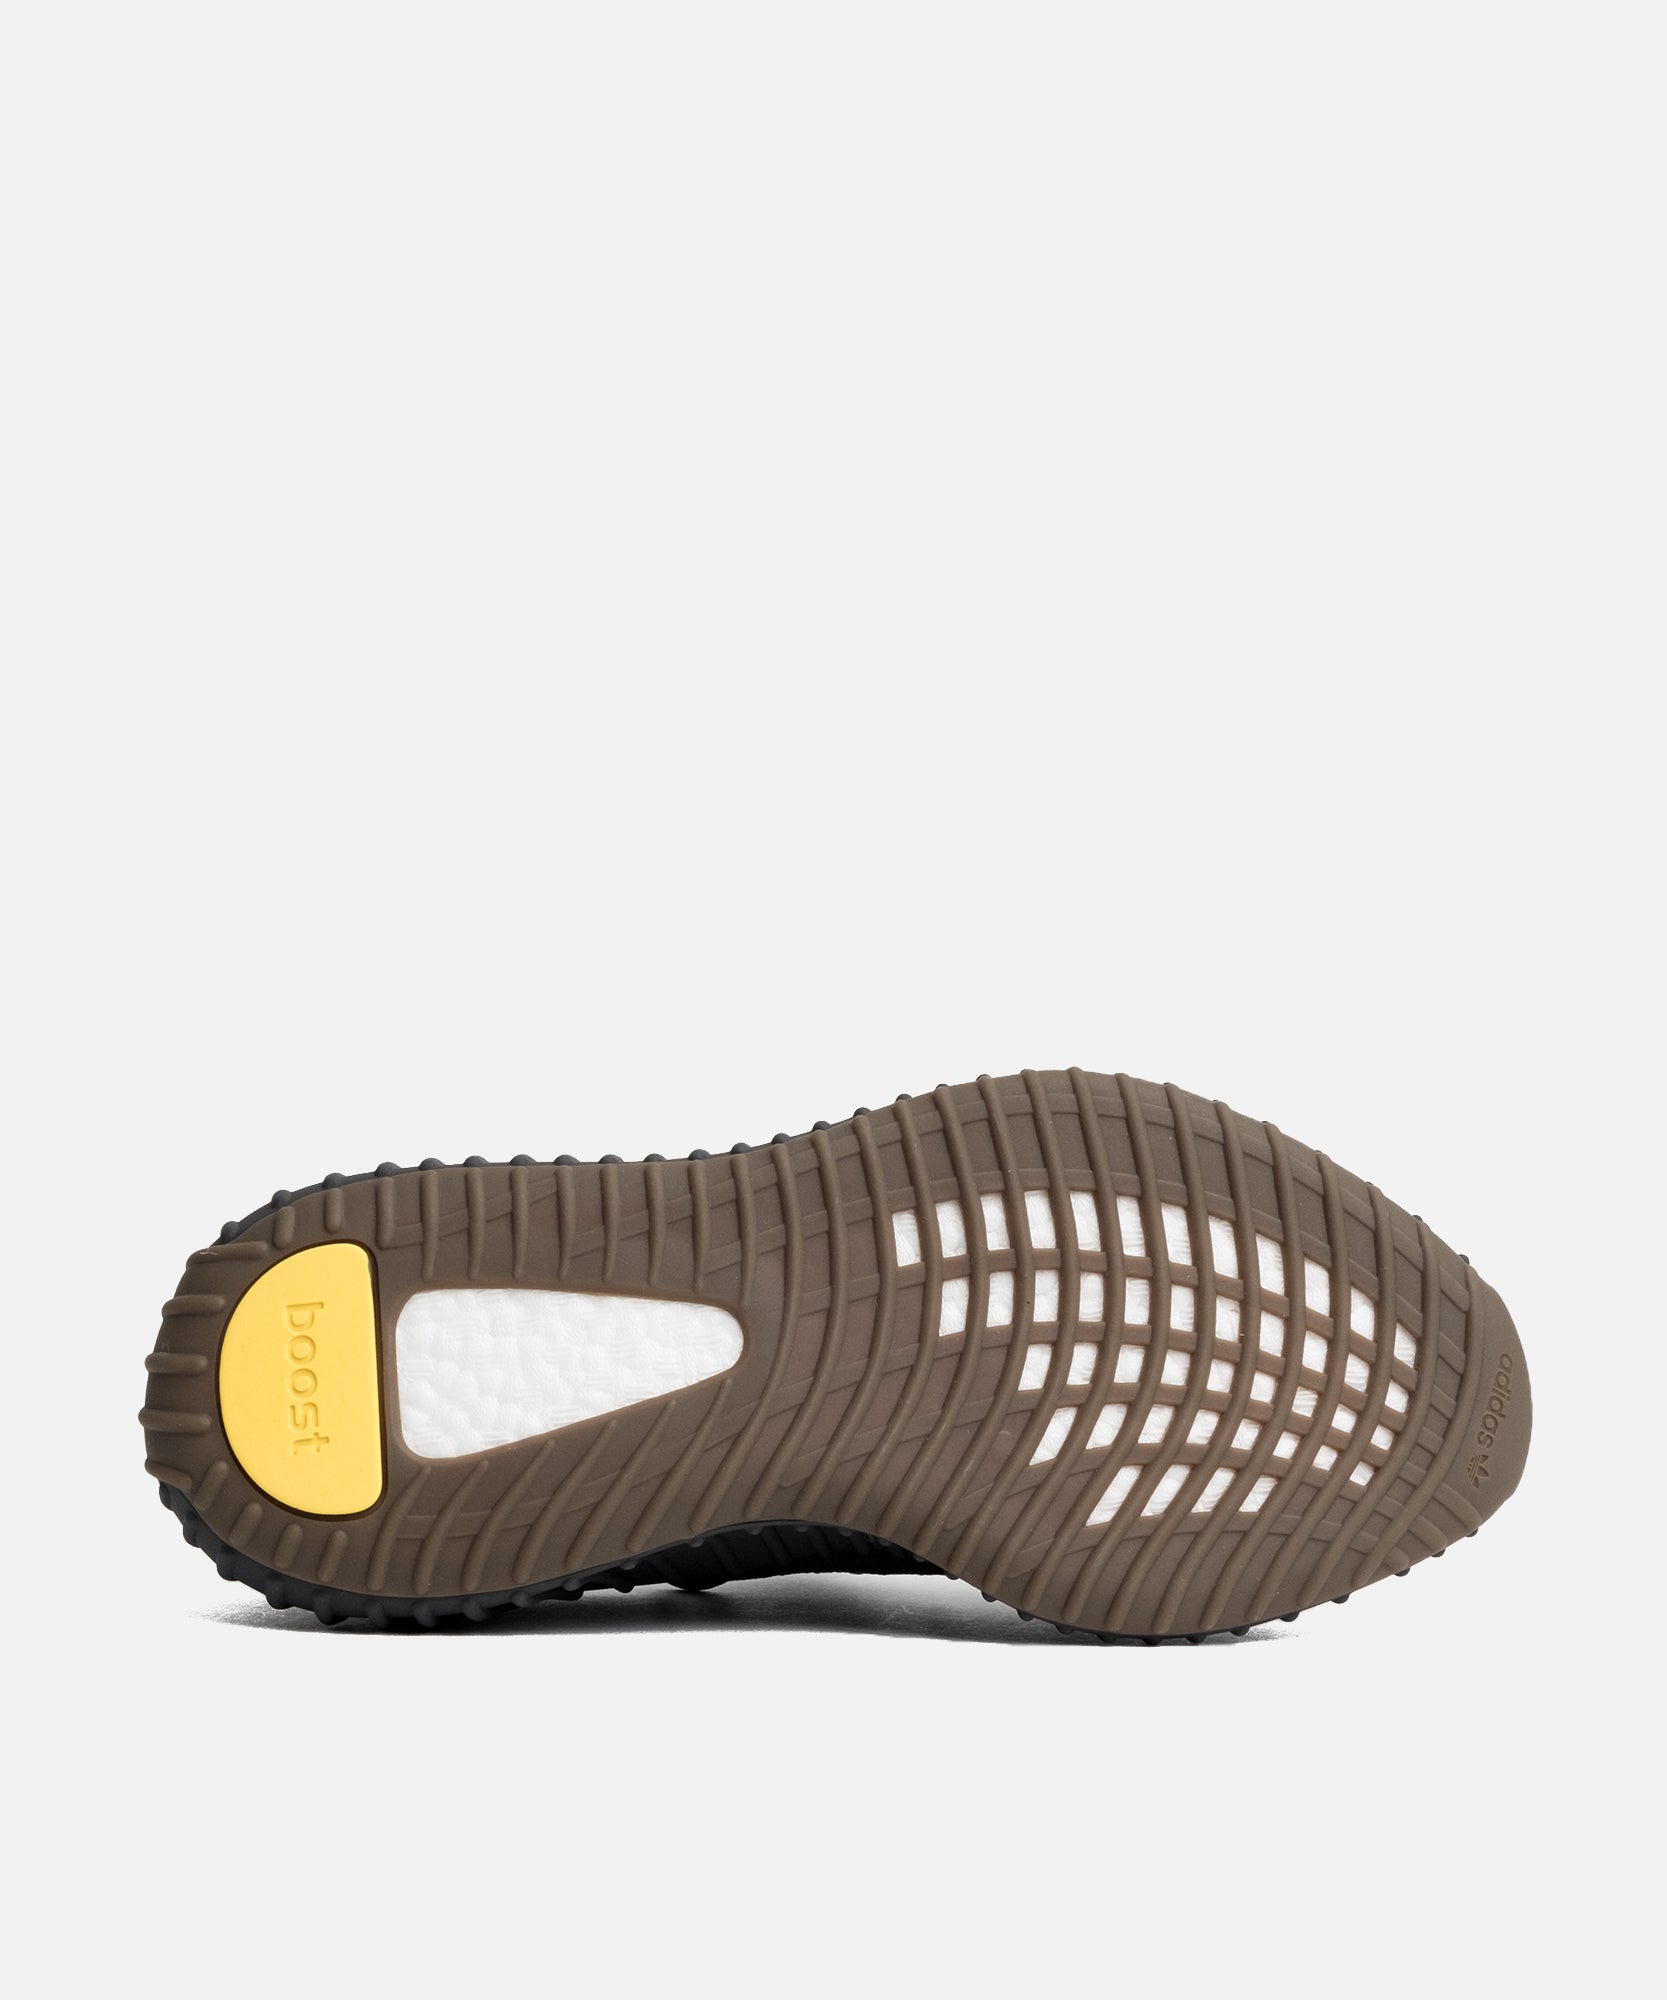 adidas Yeezy Boost 350 V2 (Cinder/Cinder/Cinder) – Patta